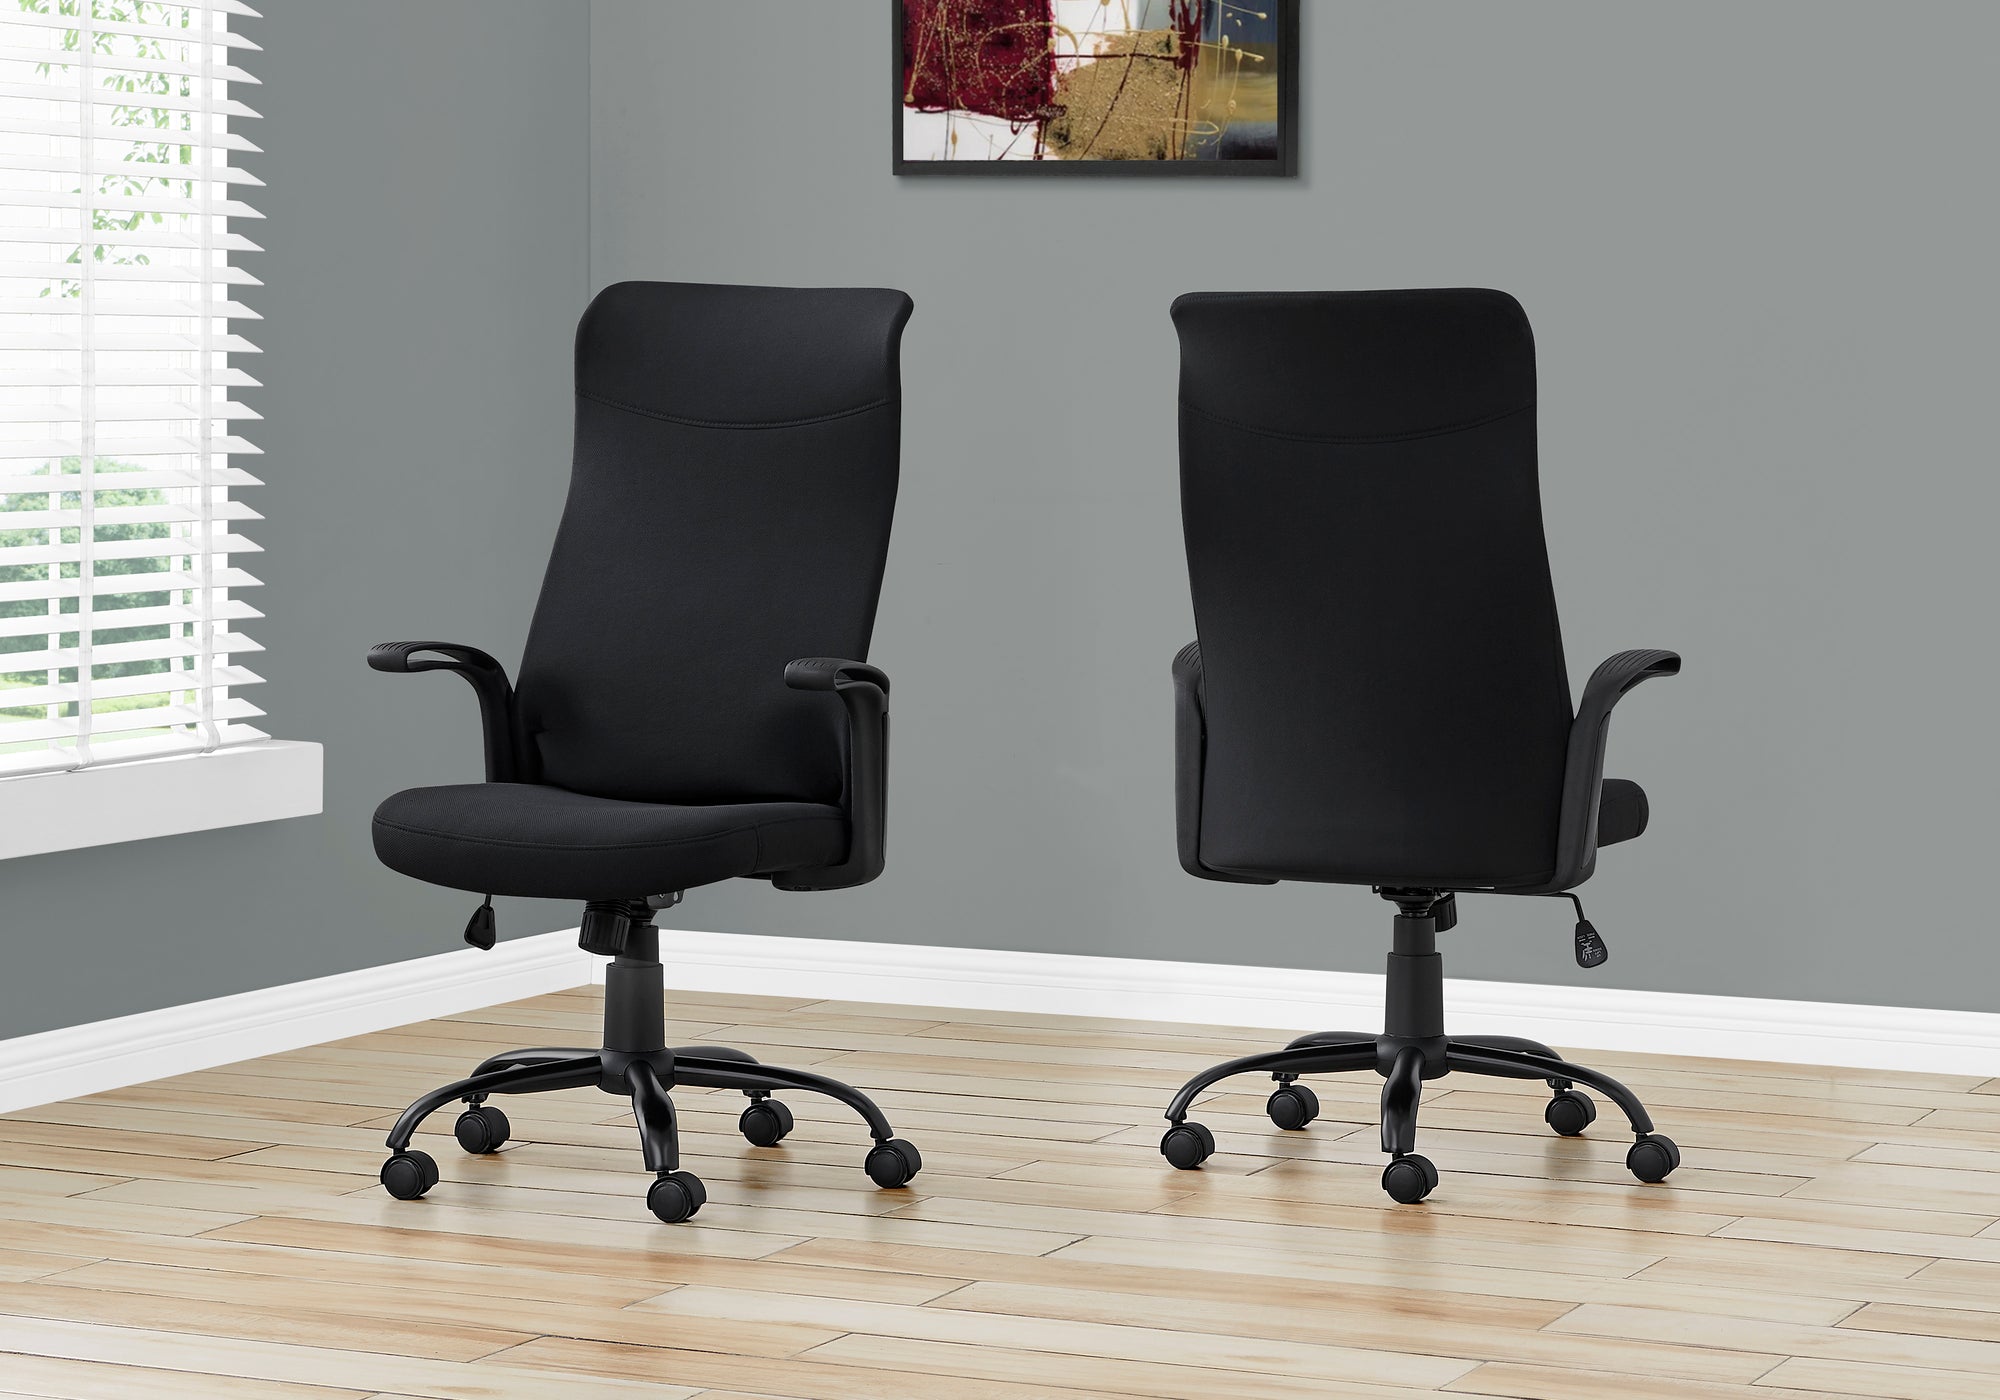 MN-667248    Office Chair, Adjustable Height, Swivel, Ergonomic, Armrests, Computer Desk, Office, Metal Base, Fabric, Black, Contemporary, Modern